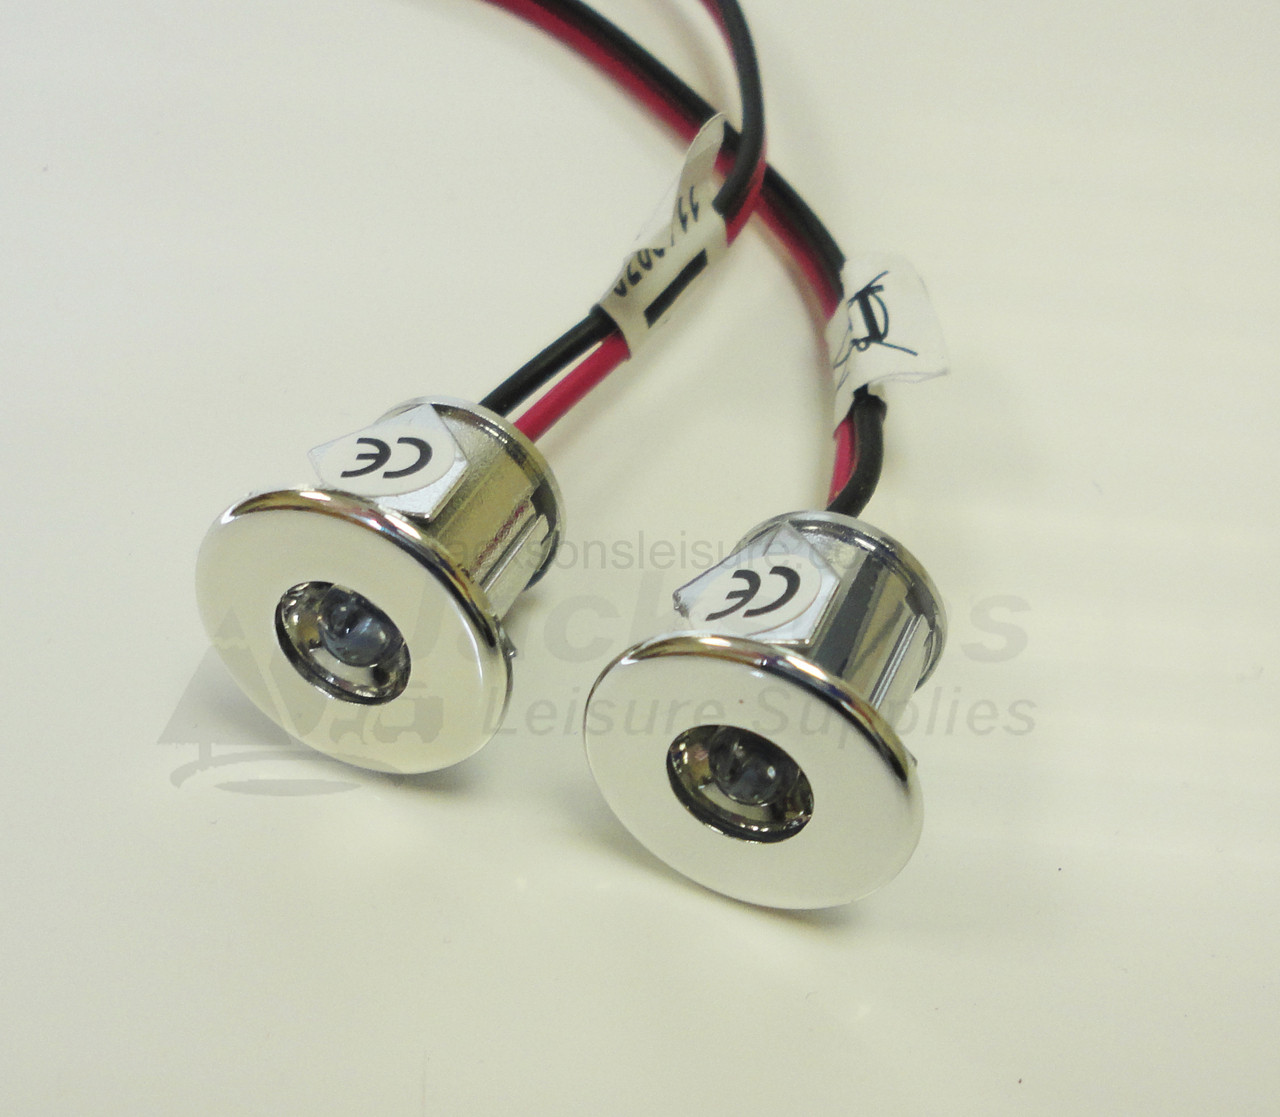 miniature 12 volt led lights